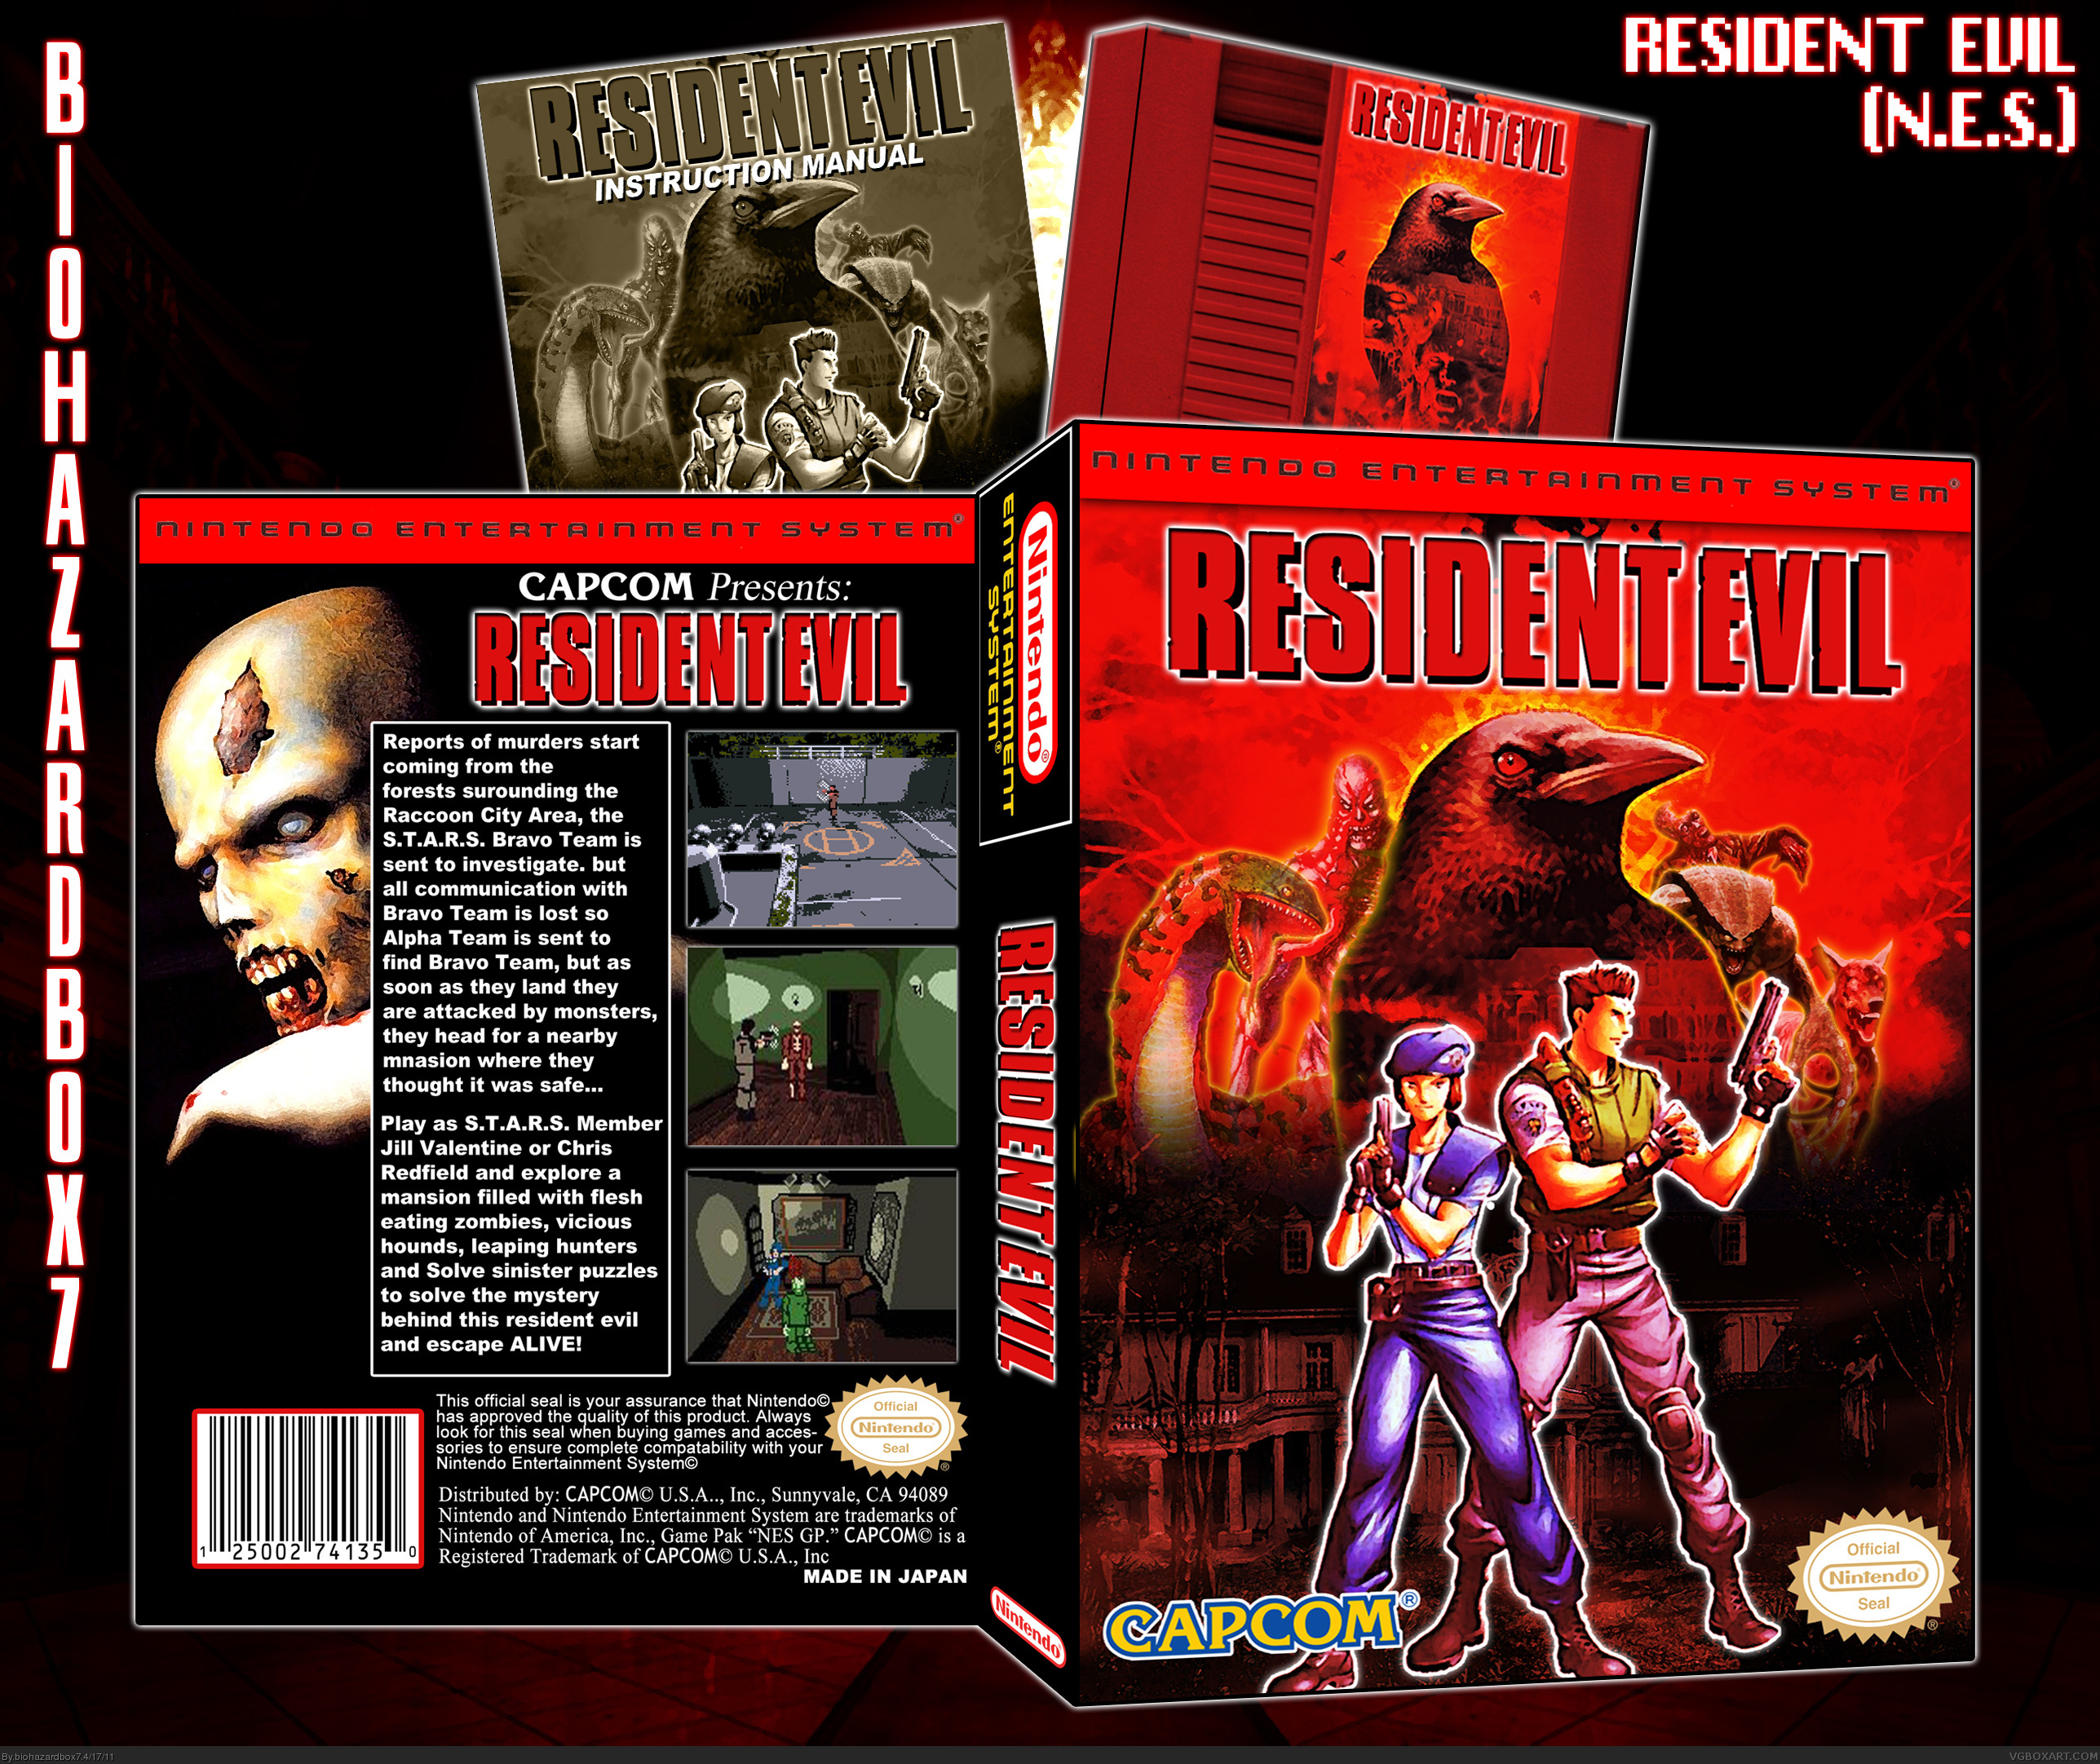 Resident Evil NES Box Art Cover by biohazardbox7